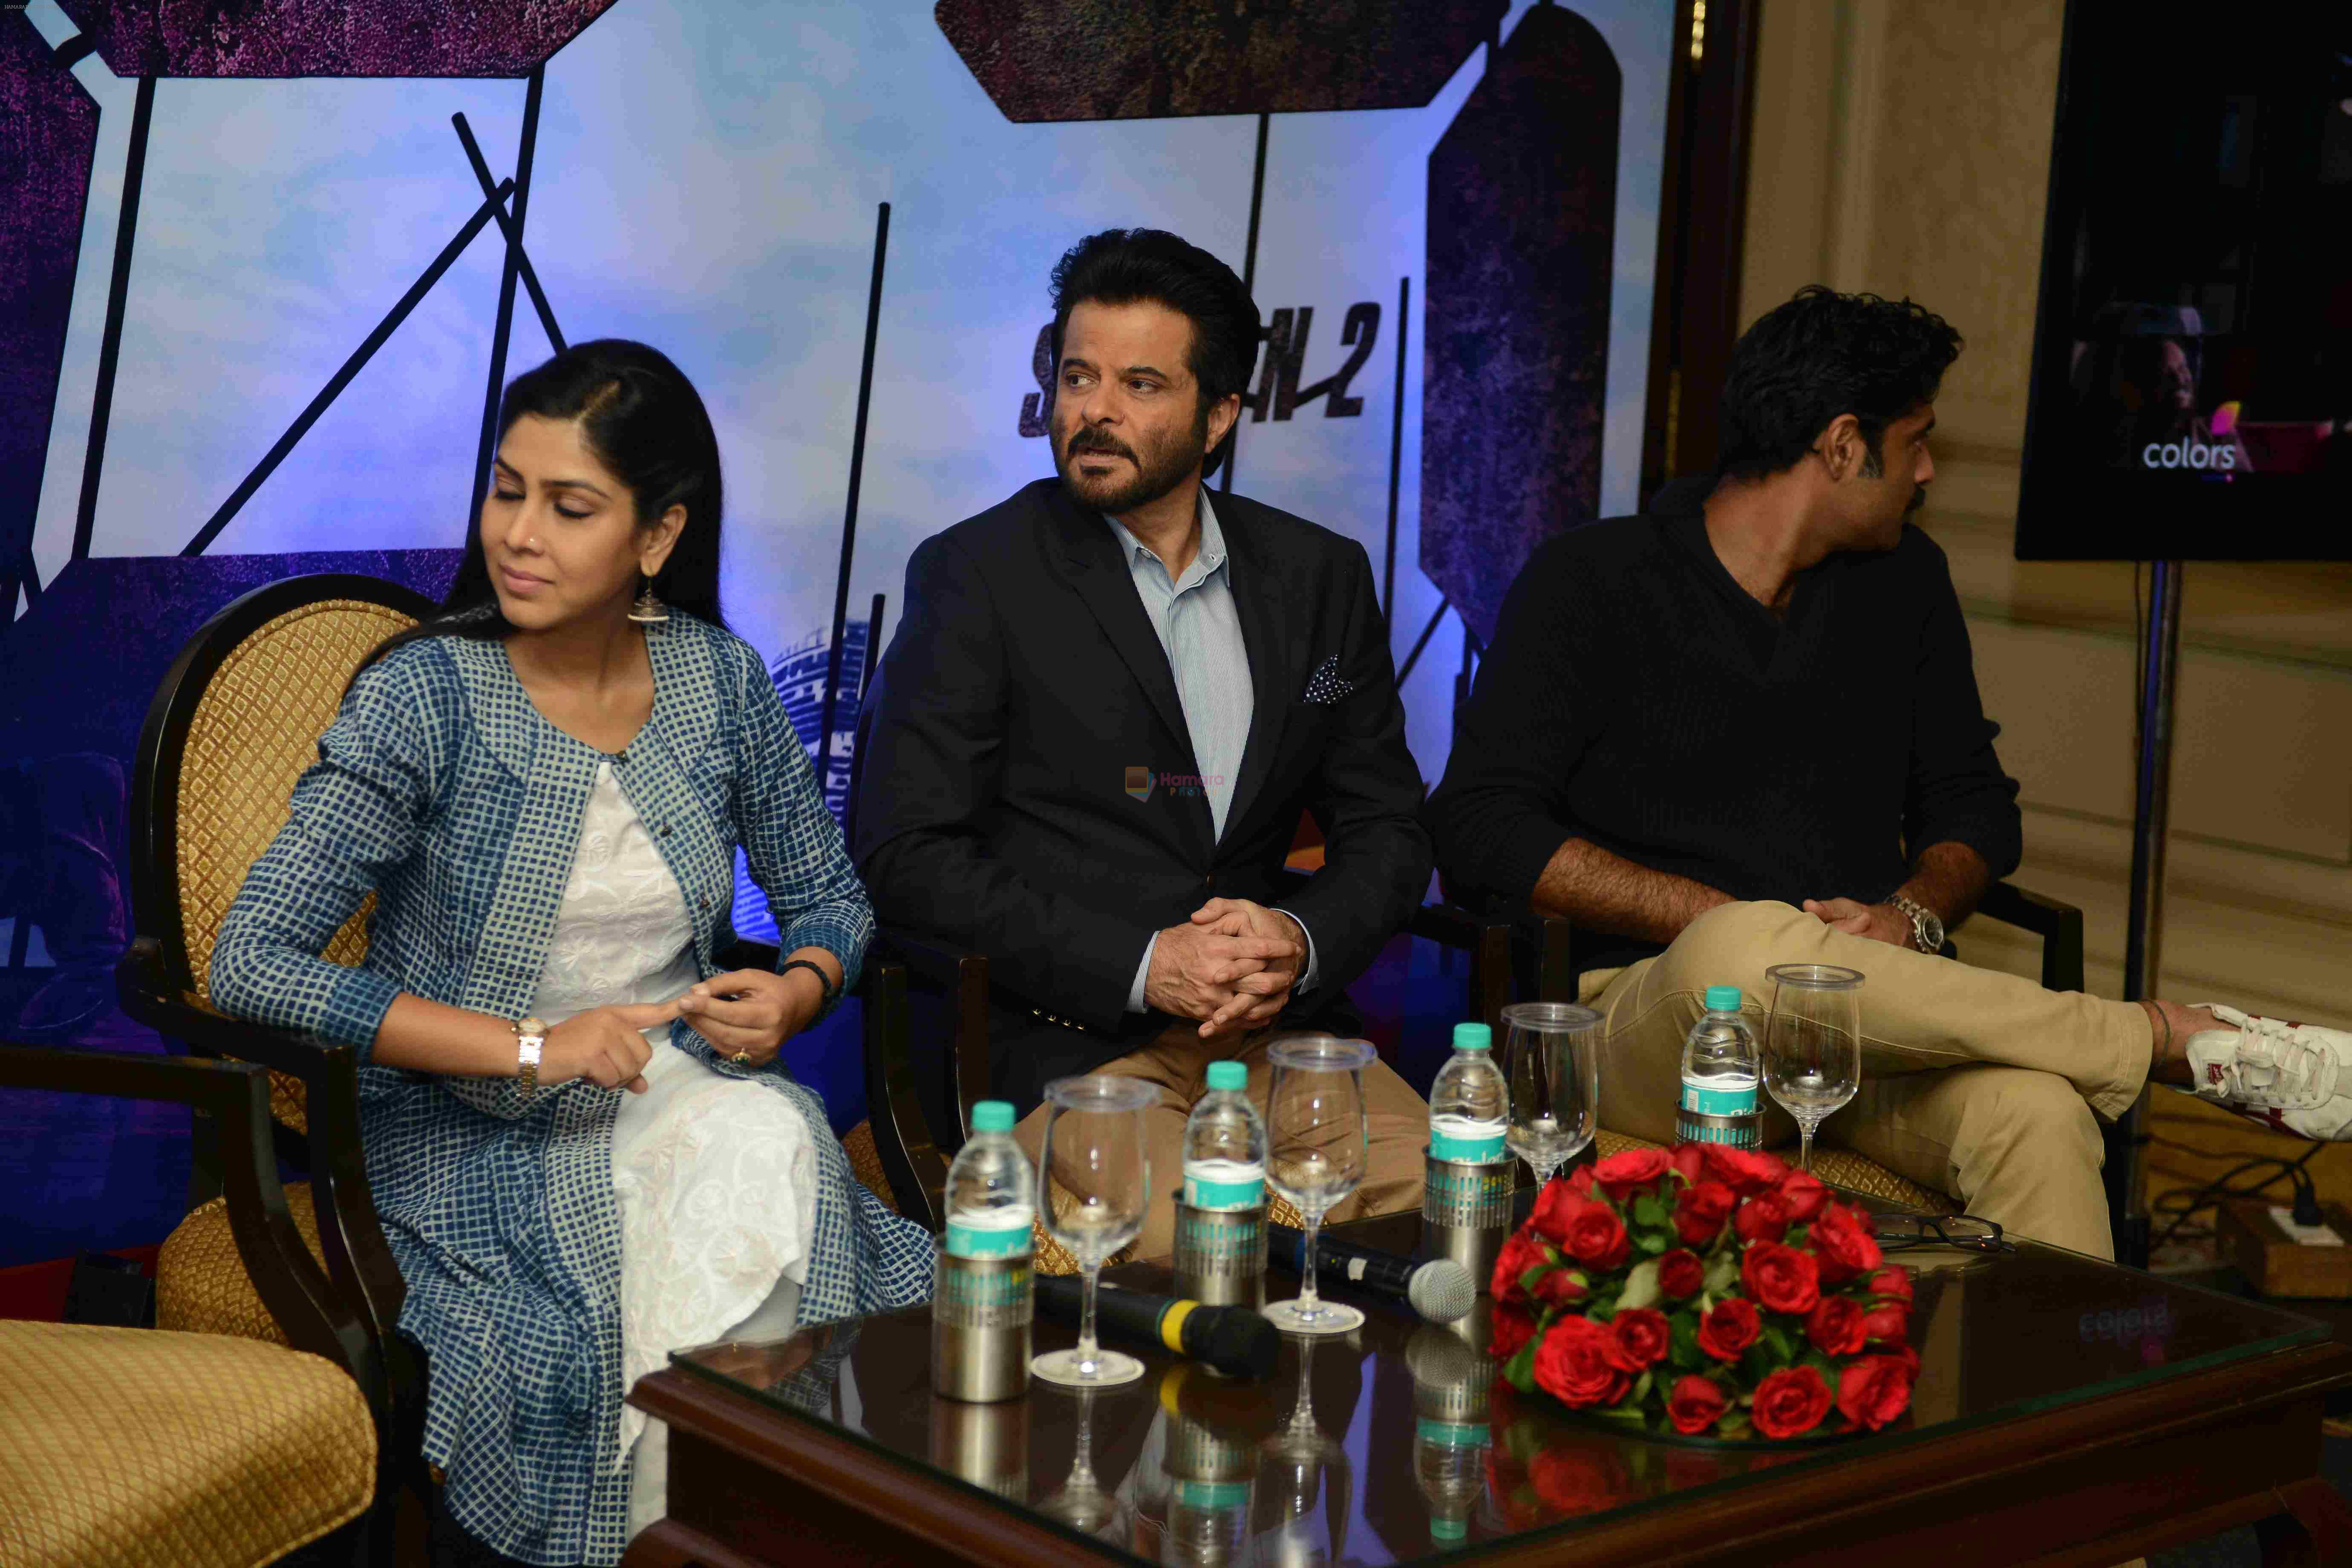 Anil Kapoor, Sakshi Tanwar, Sikandar Kher at 24 serial promotions in Mumbai on 8th July 2016